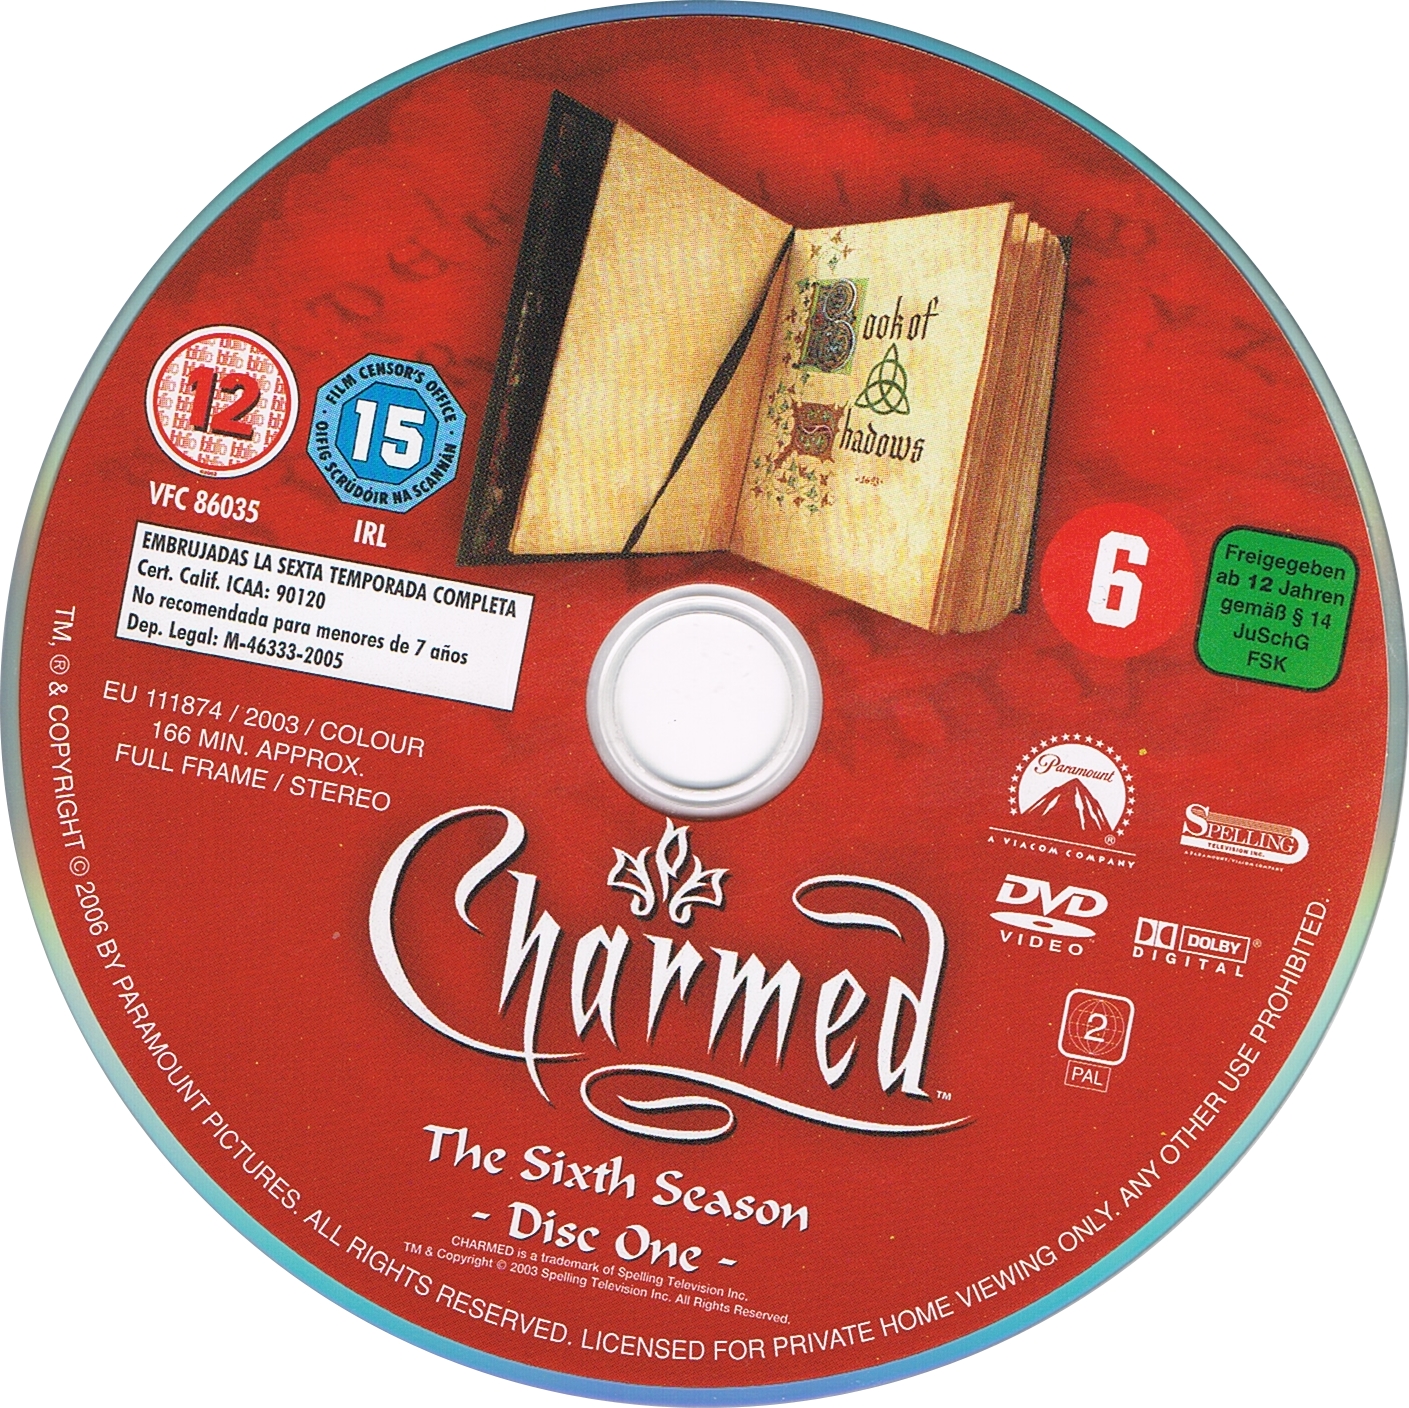 Charmed Saison 6 DISC 1